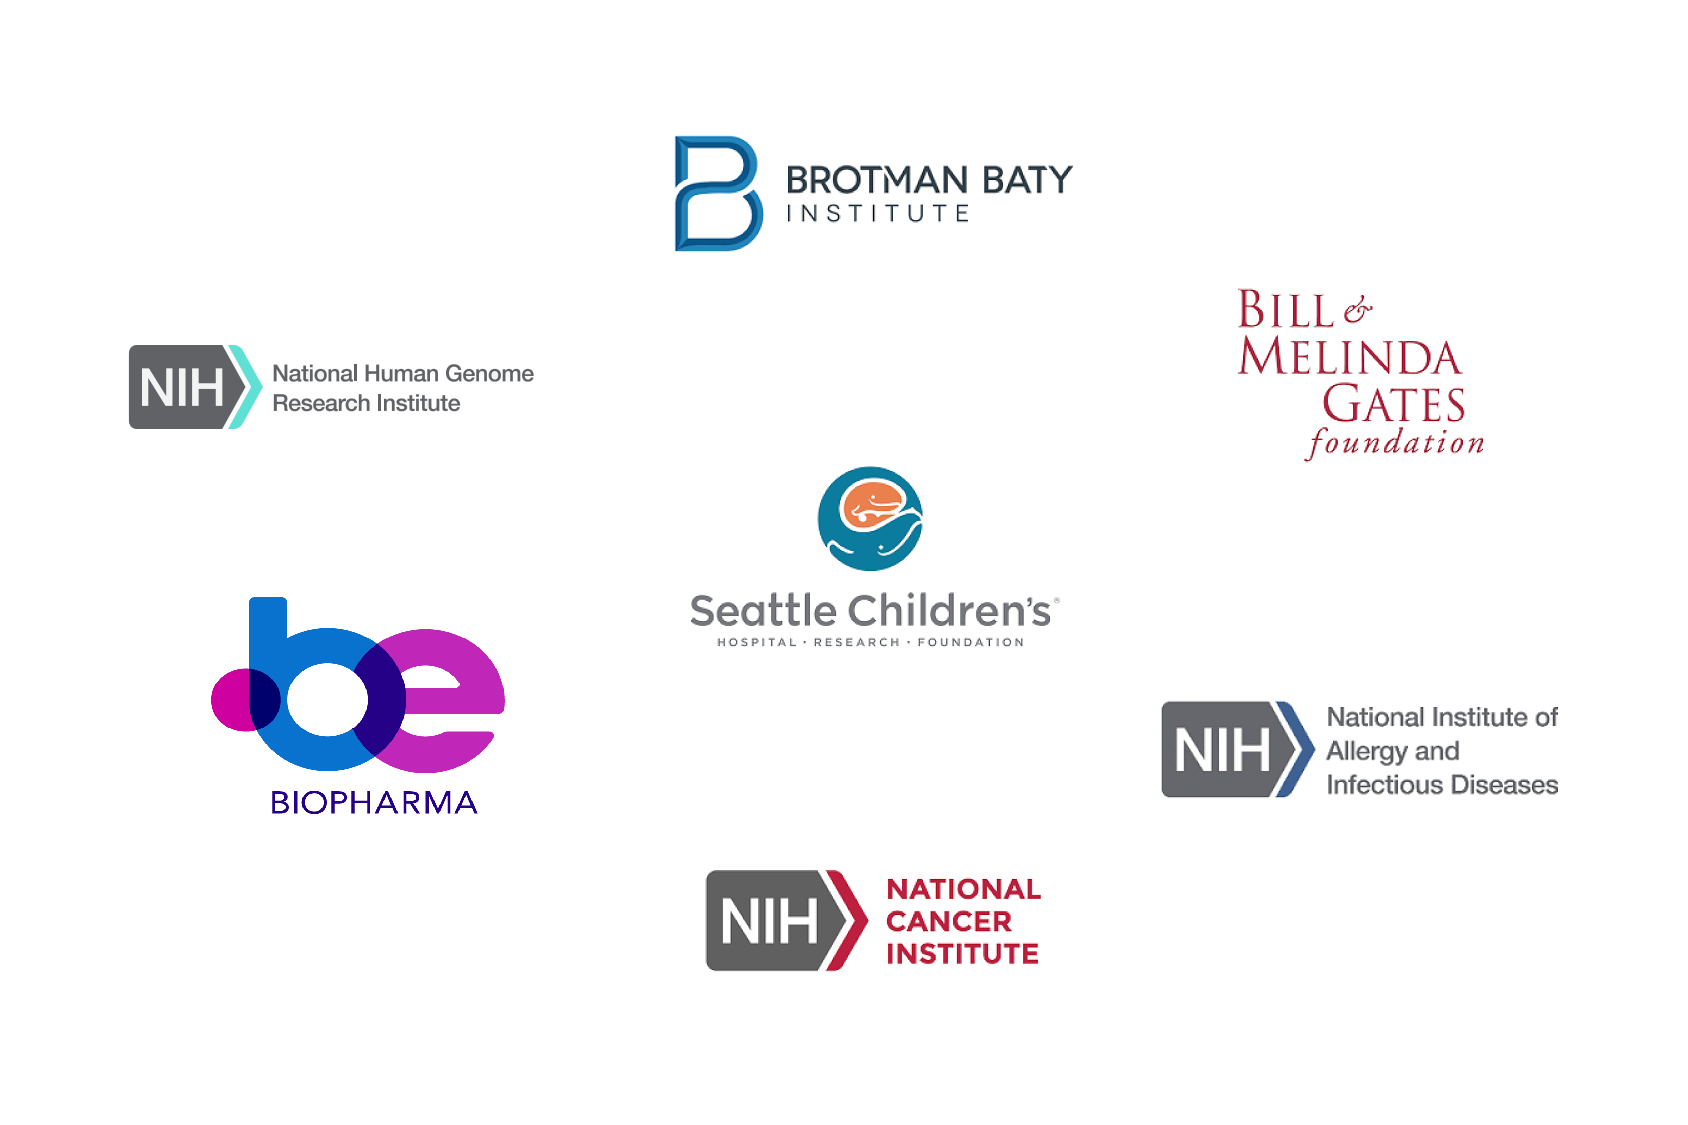 Brotman Baty, Bill & Melinda Gates, Seattle Children's Hospital, Department of Defense, NIDDK, NCI, and NIAID